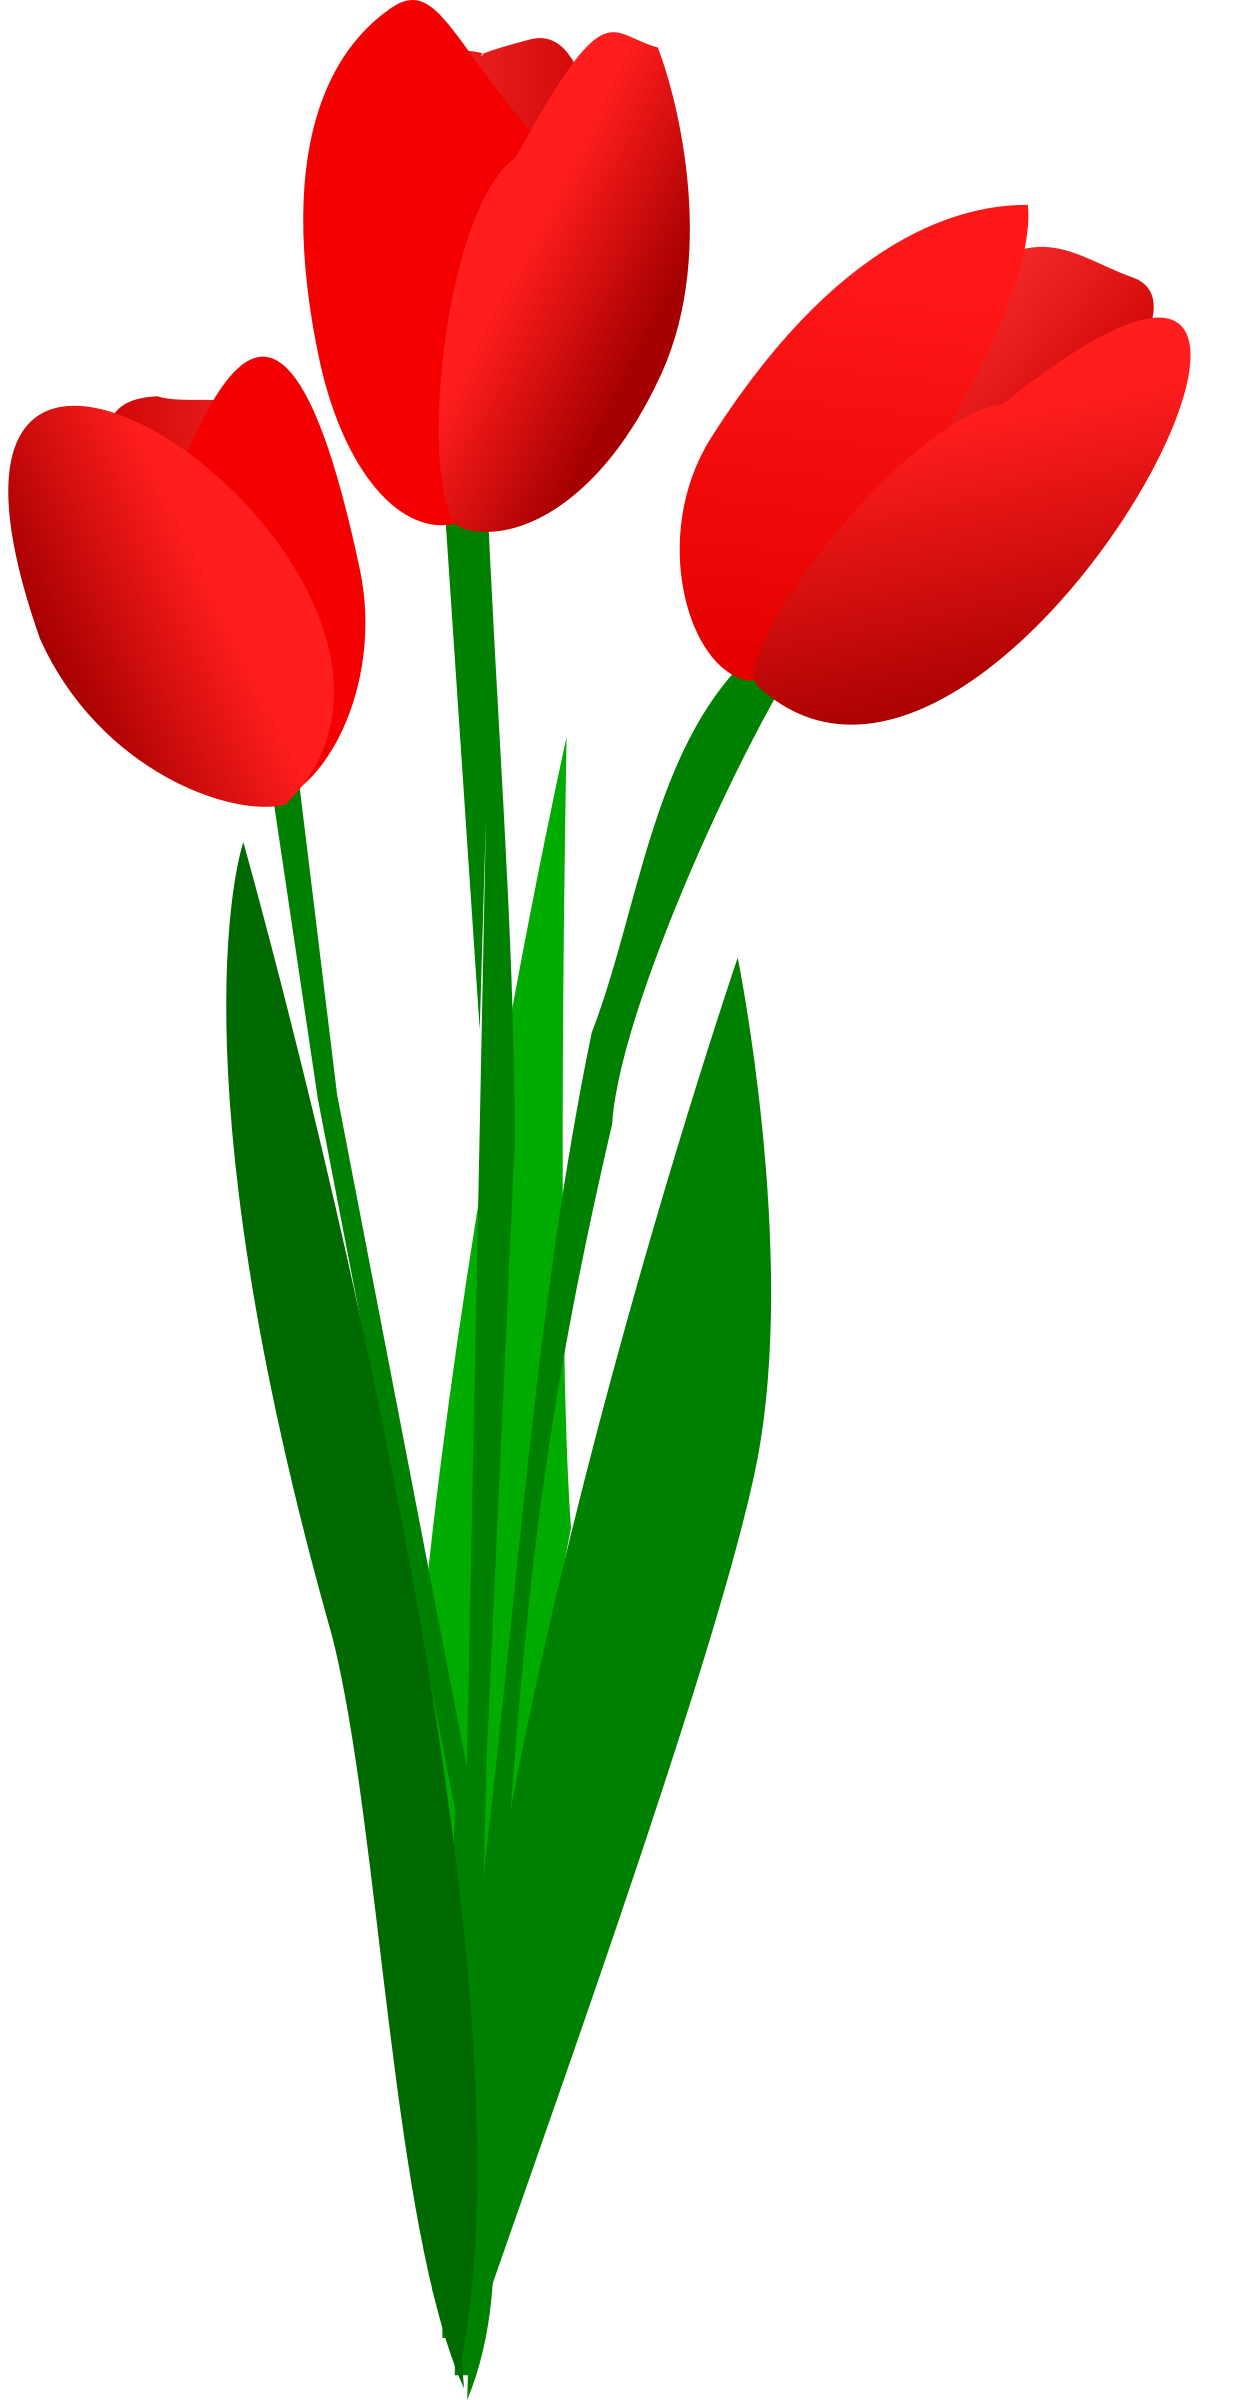 Three red tulips hoa. Clipart borders tulip